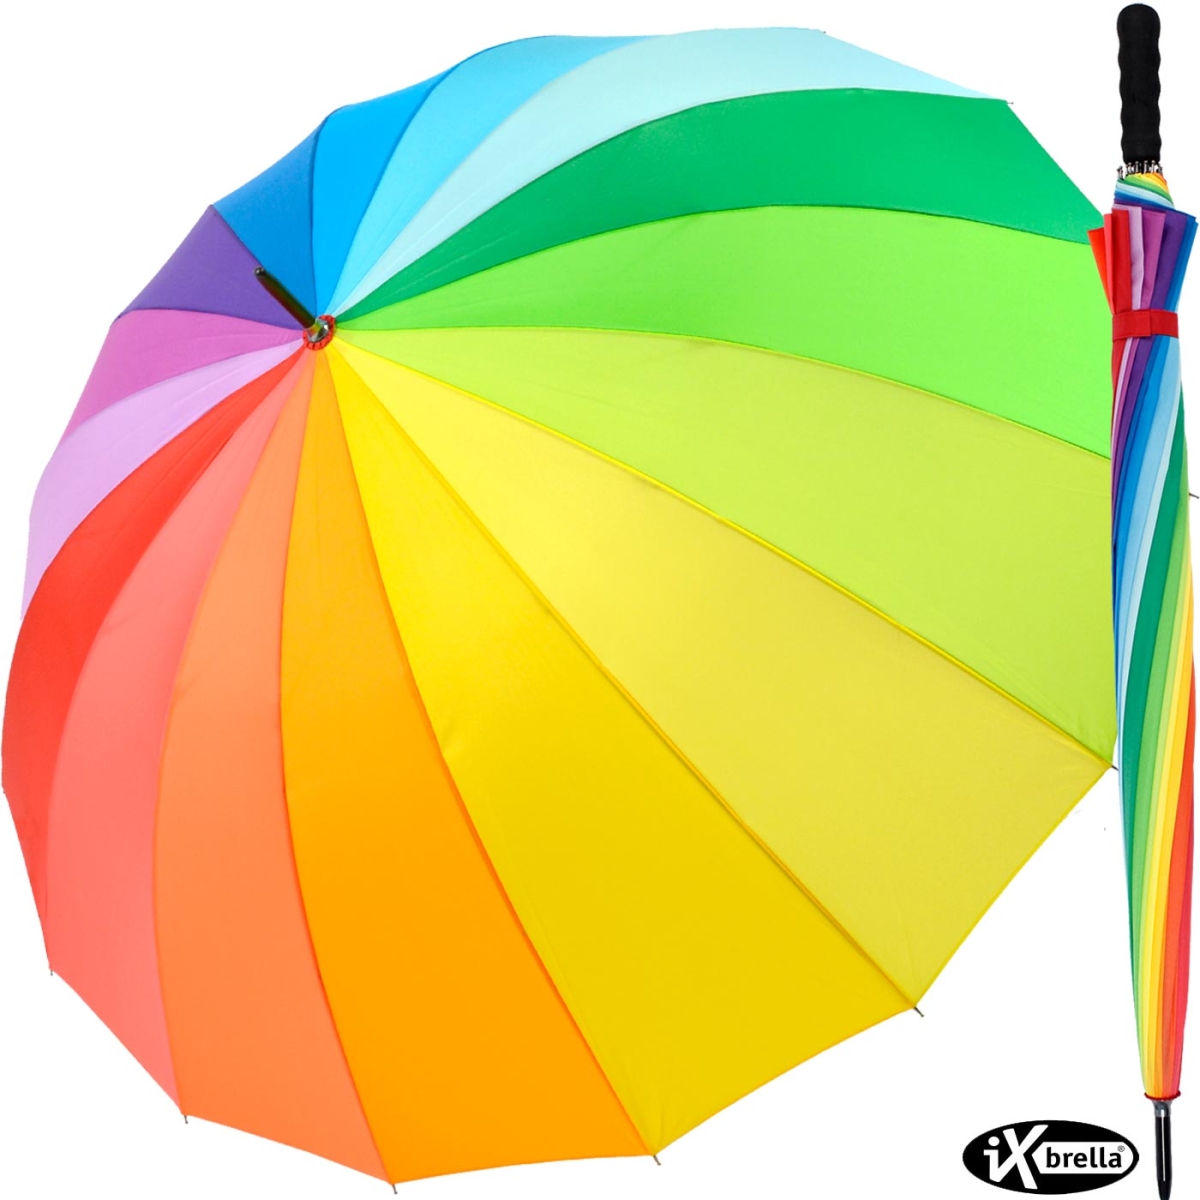 22,99 Golf-Partner-Regenschi, XXL 16-color golf € leichter iX-brella rainbow -